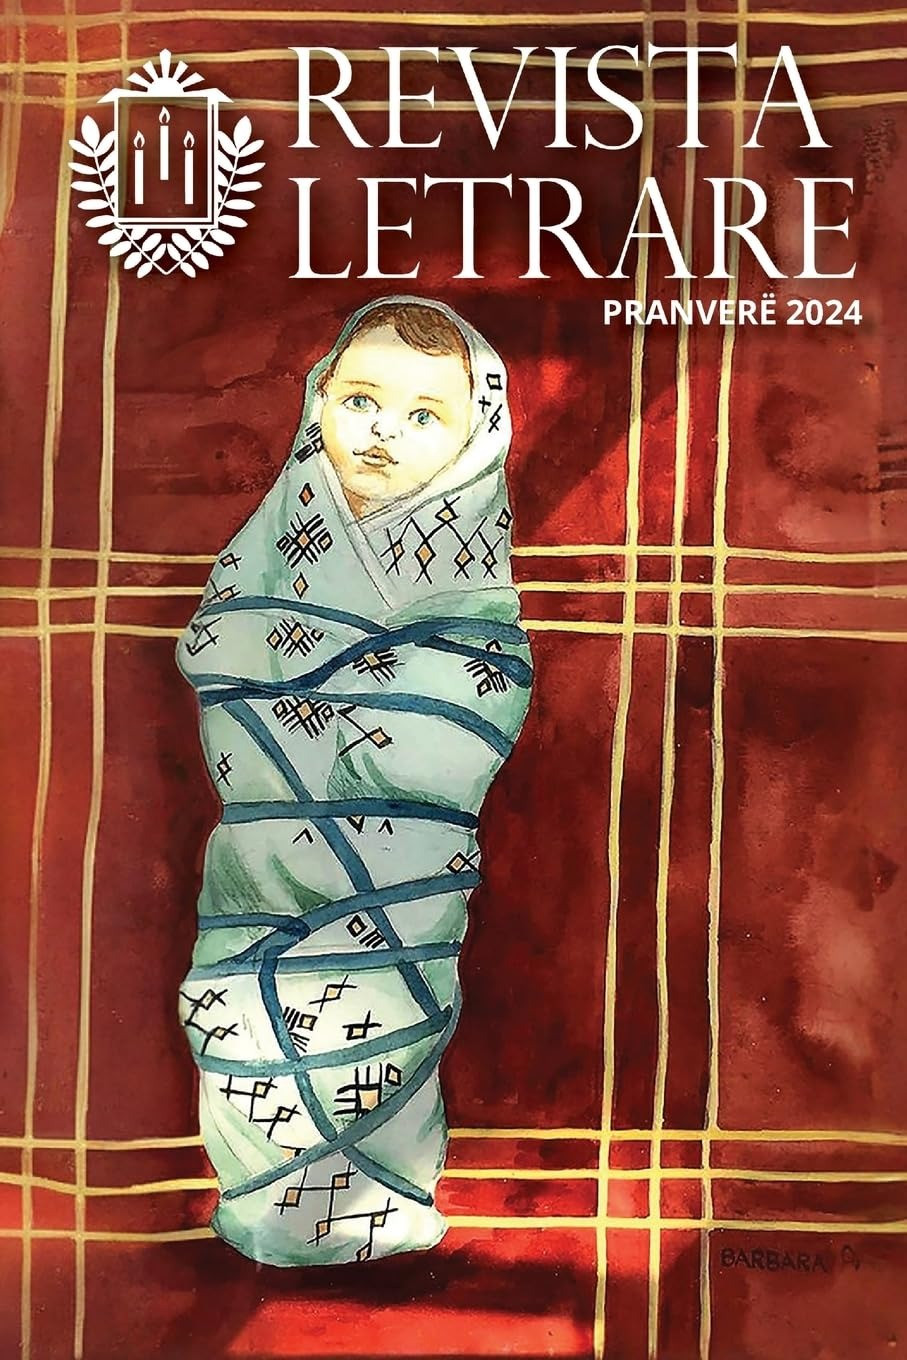 Revista Letrare – Pranvere 2024